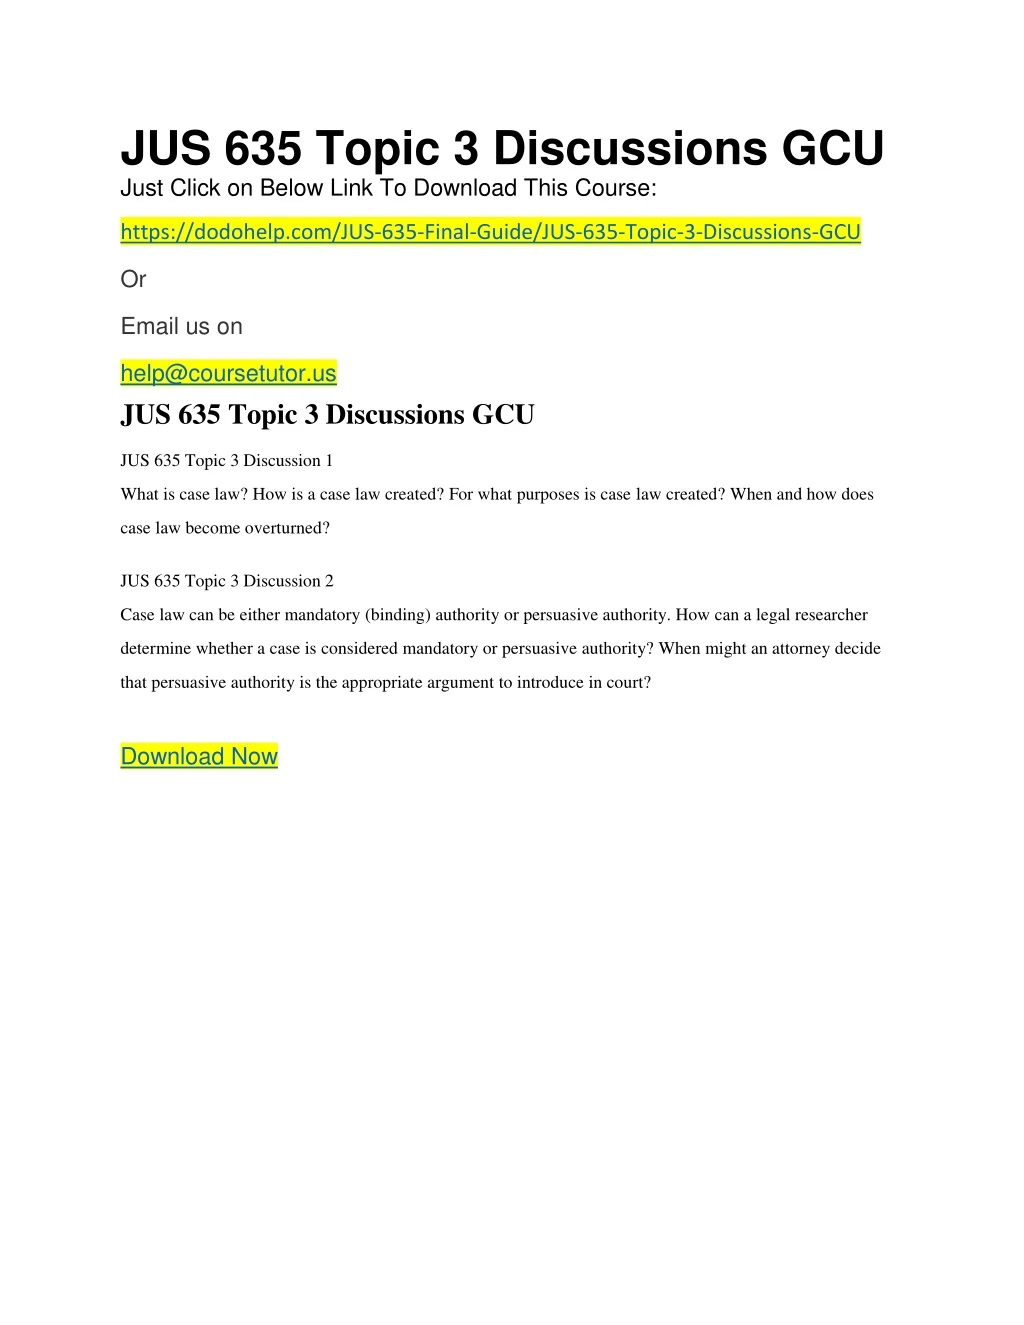 jus 635 topic 3 discussions gcu just click